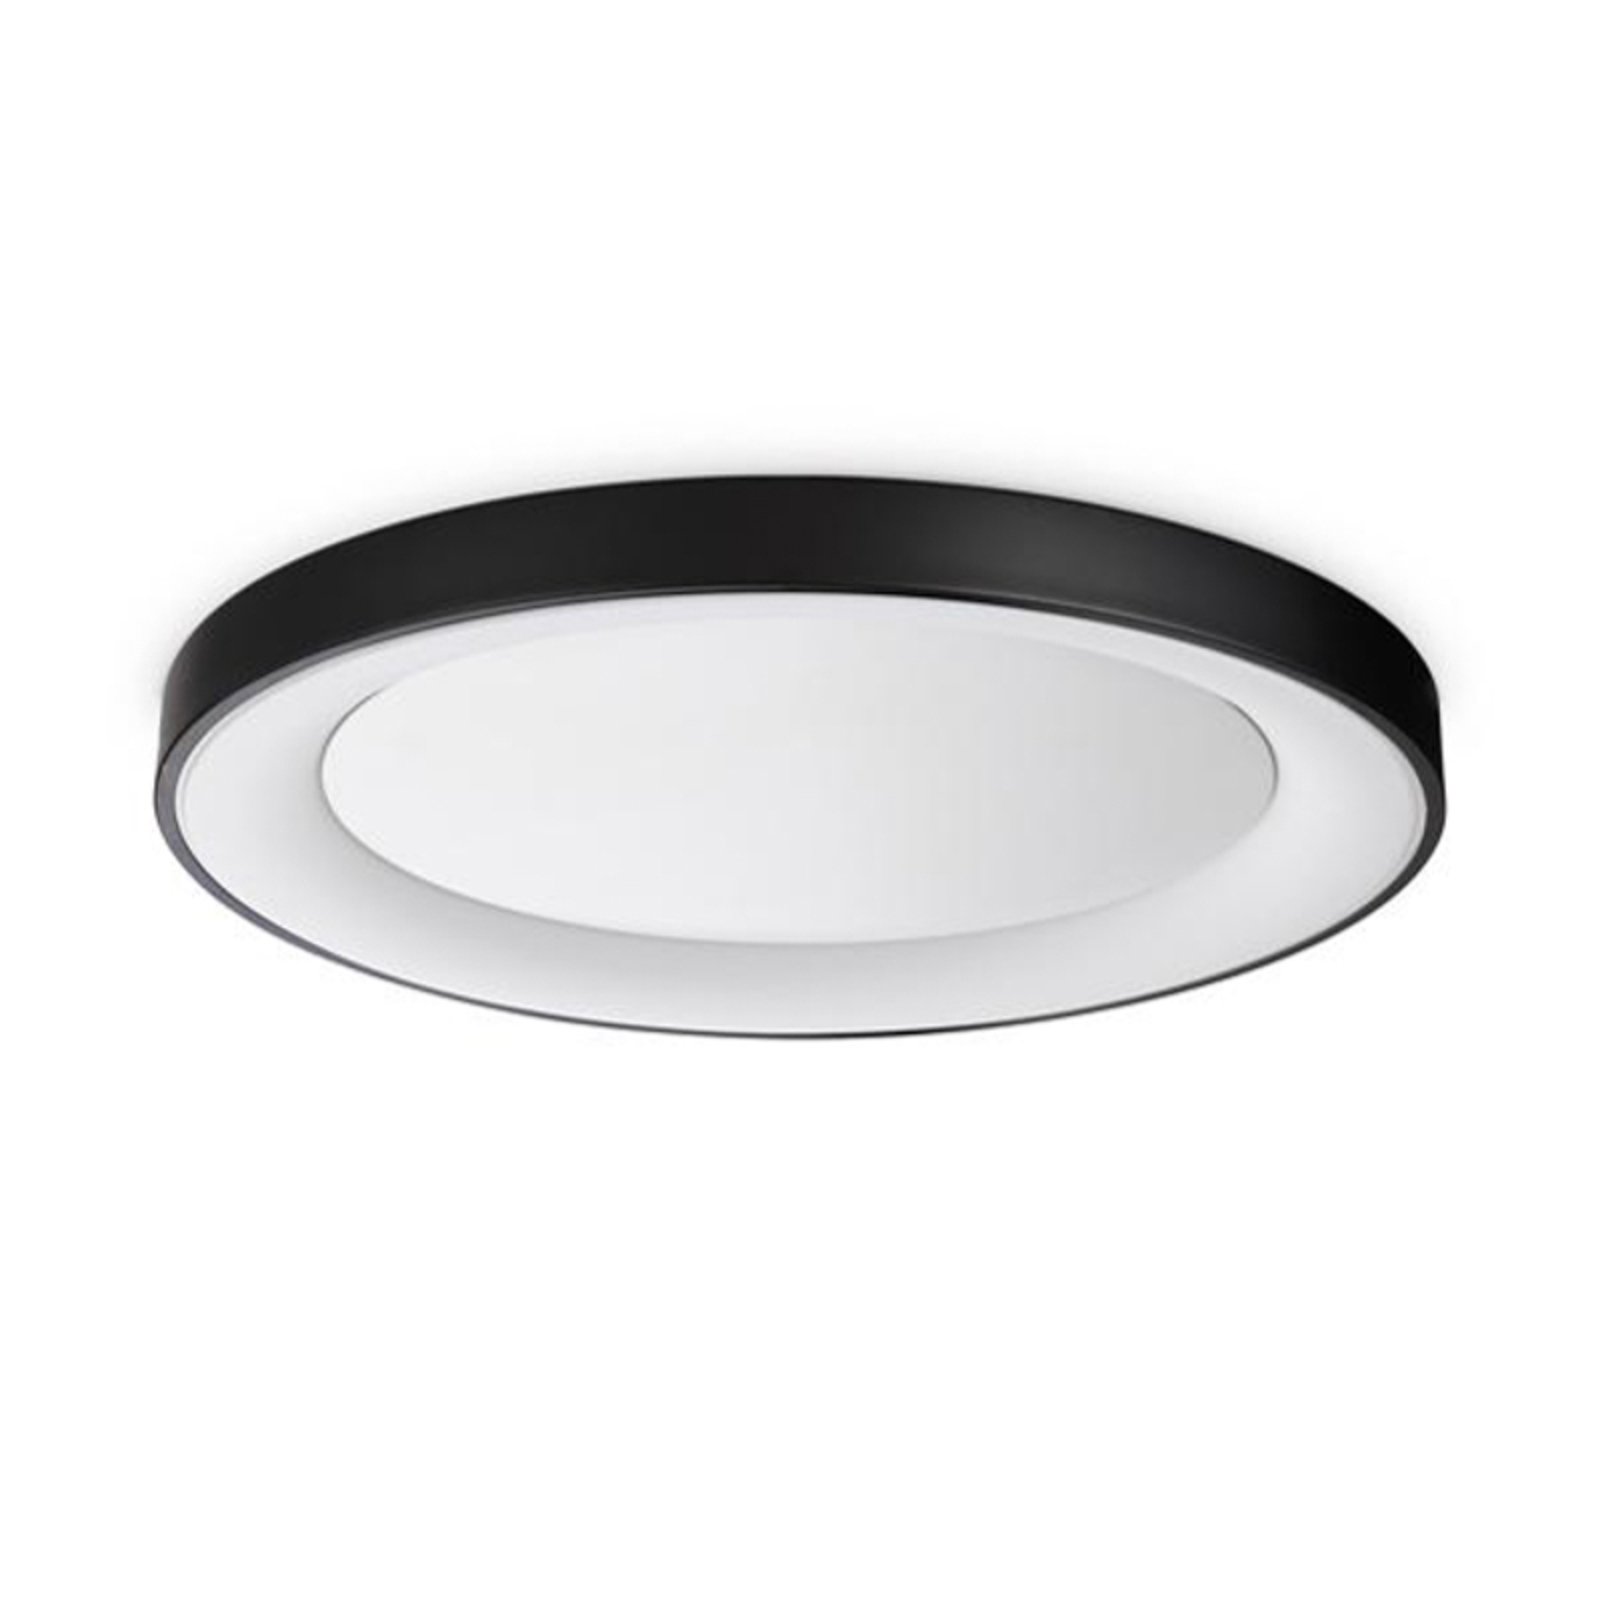 Ideal Lux LED-kattovalaisin Planet, musta, Ø 60 cm, metallia